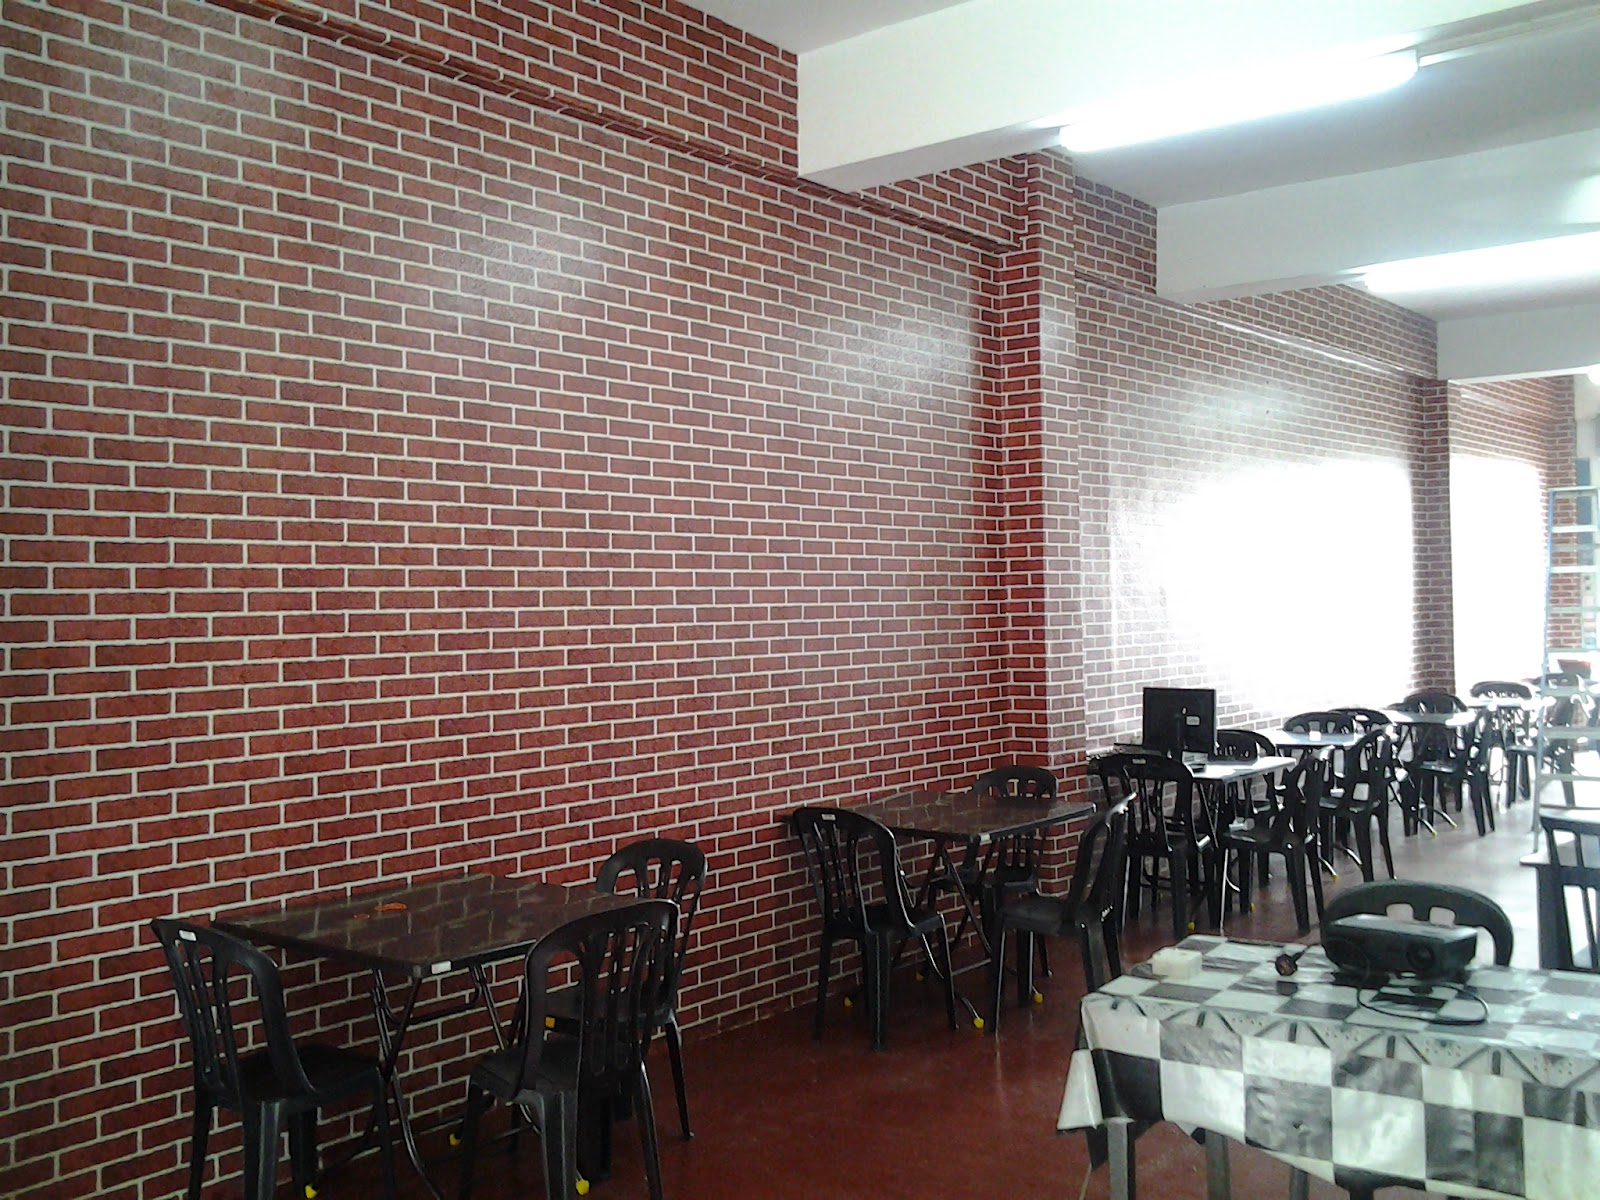 kedai wallpaper,pared,ladrillo,edificio,restaurante,habitación